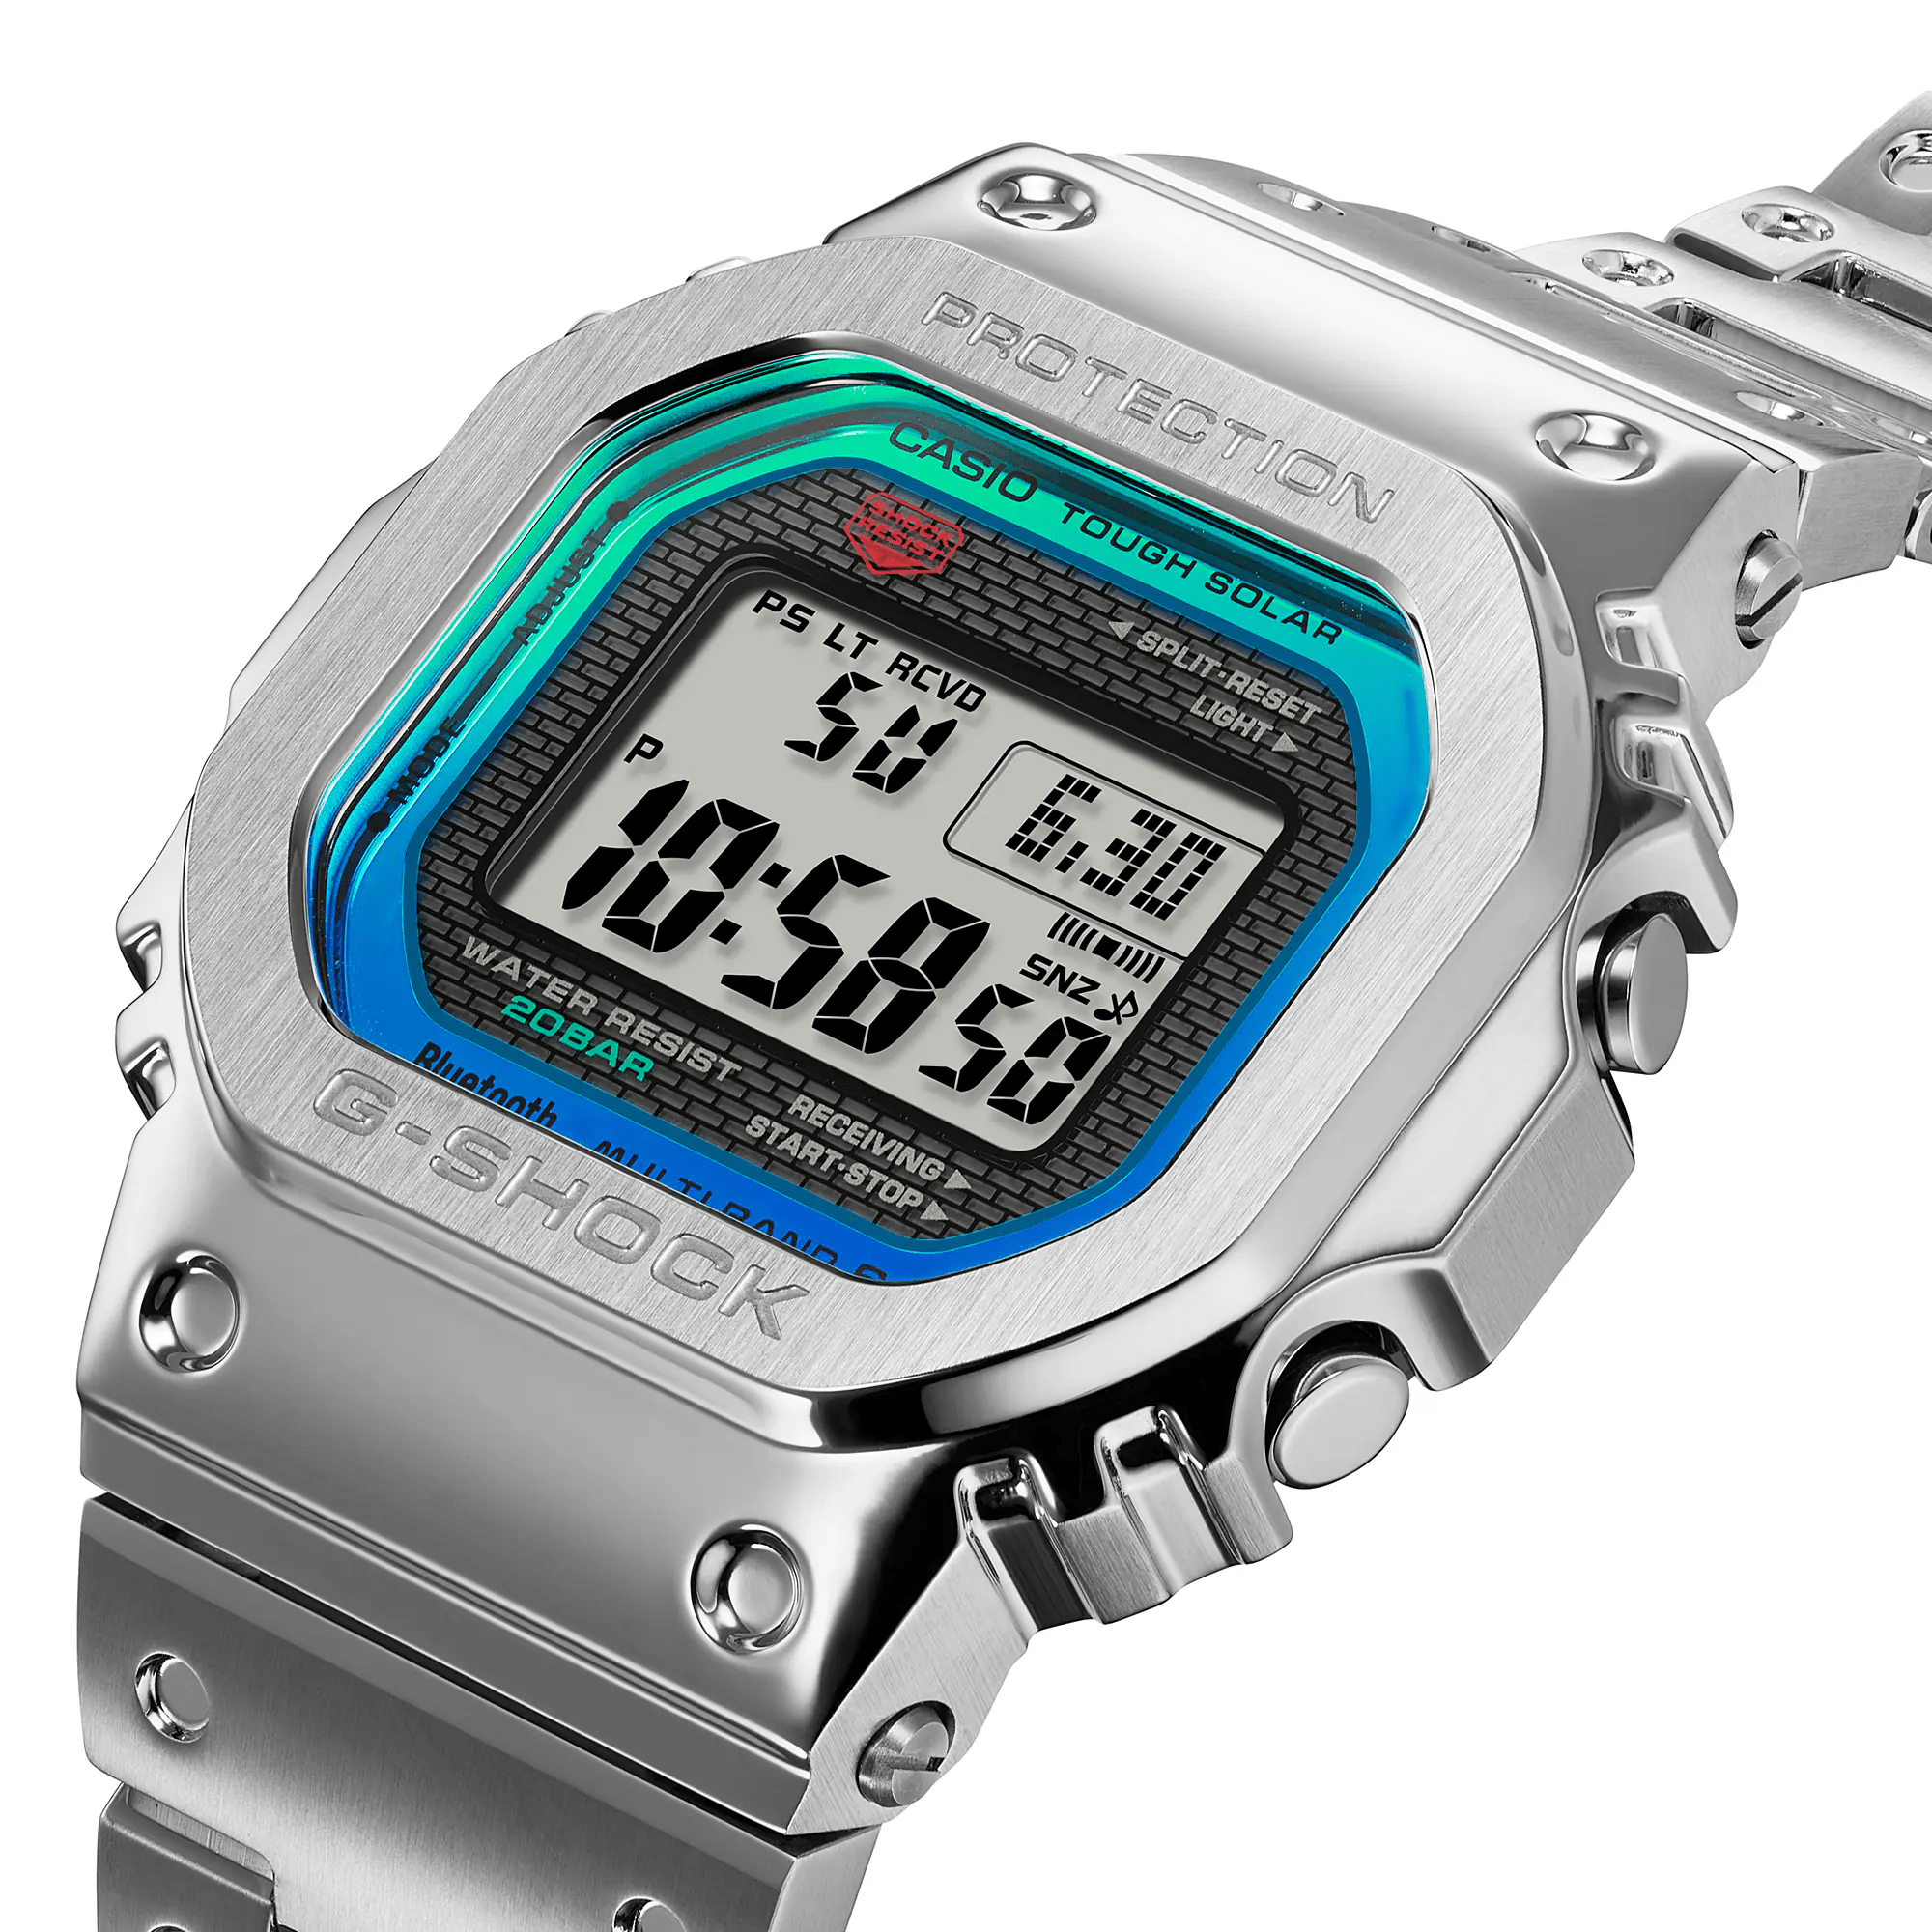 Men's Digital Watches - Tough, Water Resistant Digital Watches, G-SHOCK